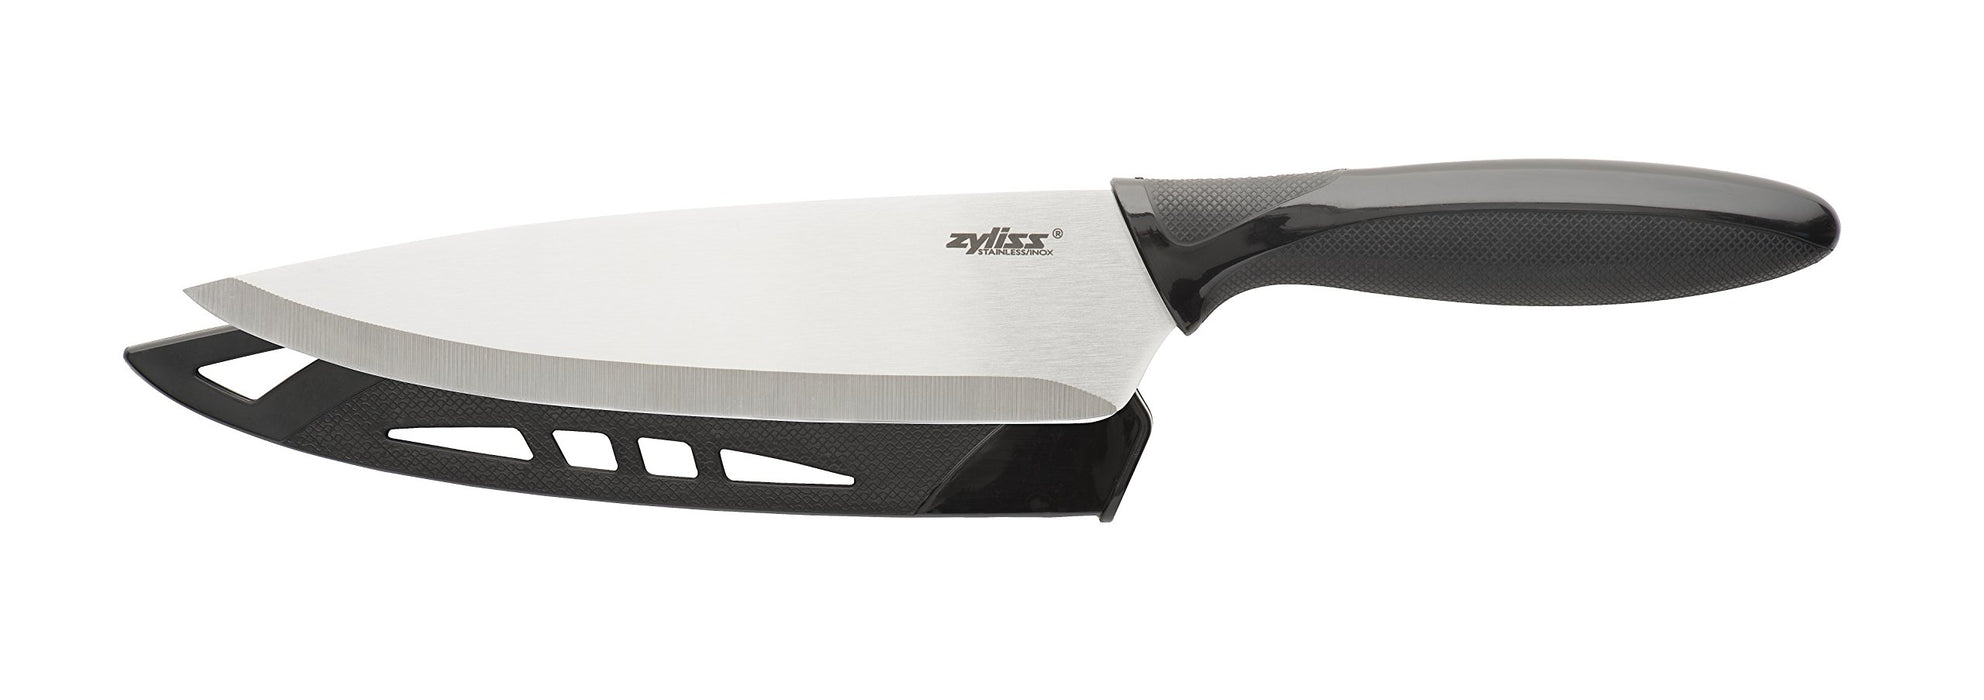 Zyliss E920247 Comfort 5 Piece Knife Set, Multiple Sizes